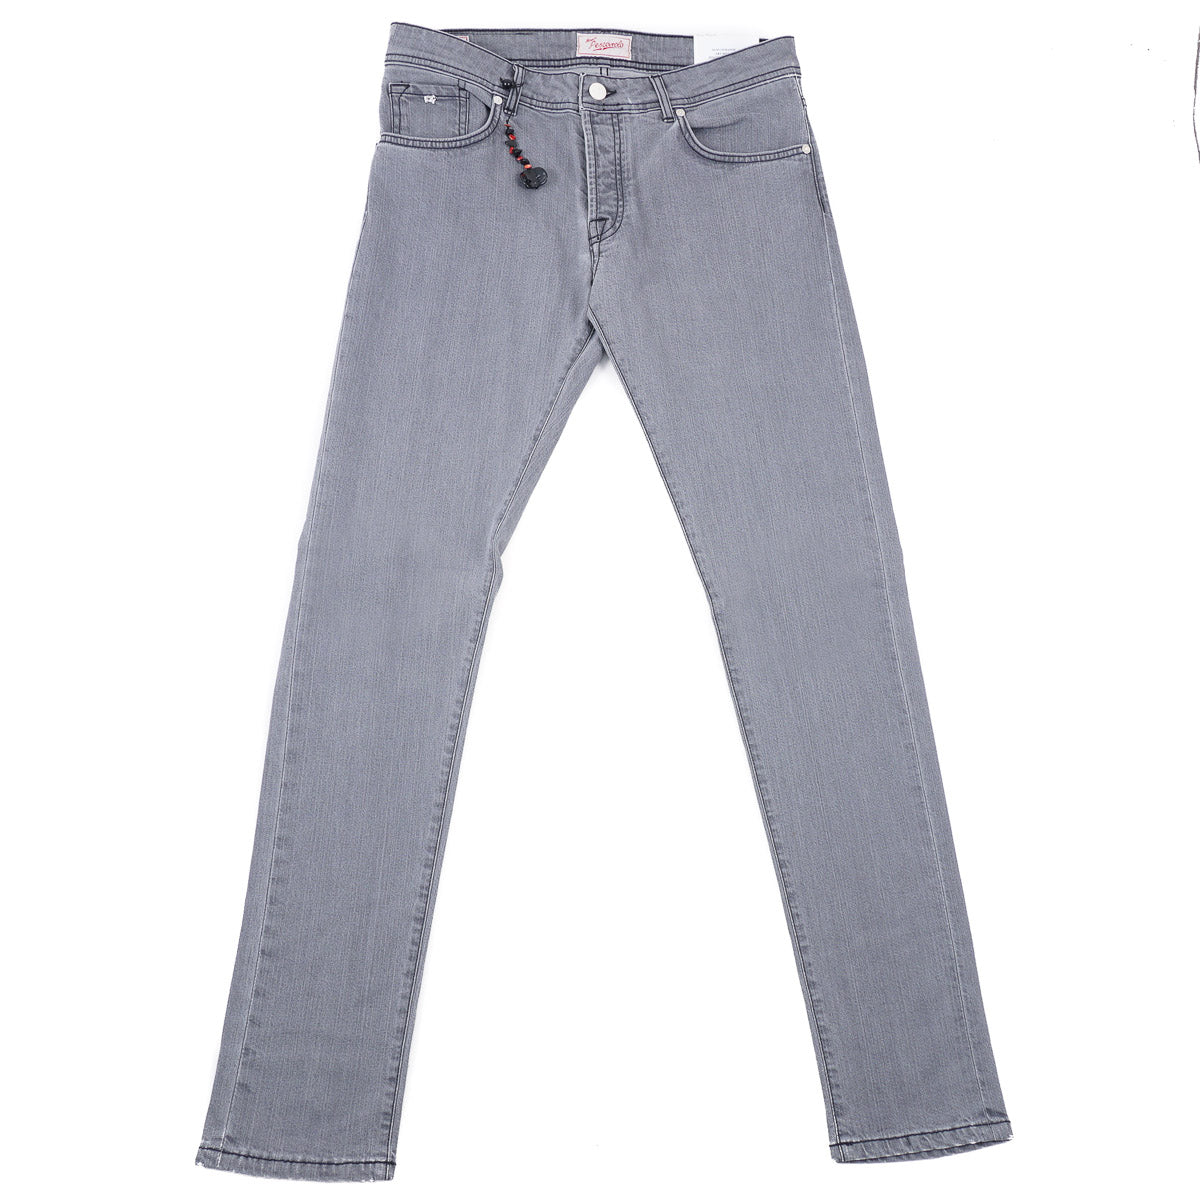 Marco Pescarolo Cotton and Cashmere Jeans - Top Shelf Apparel